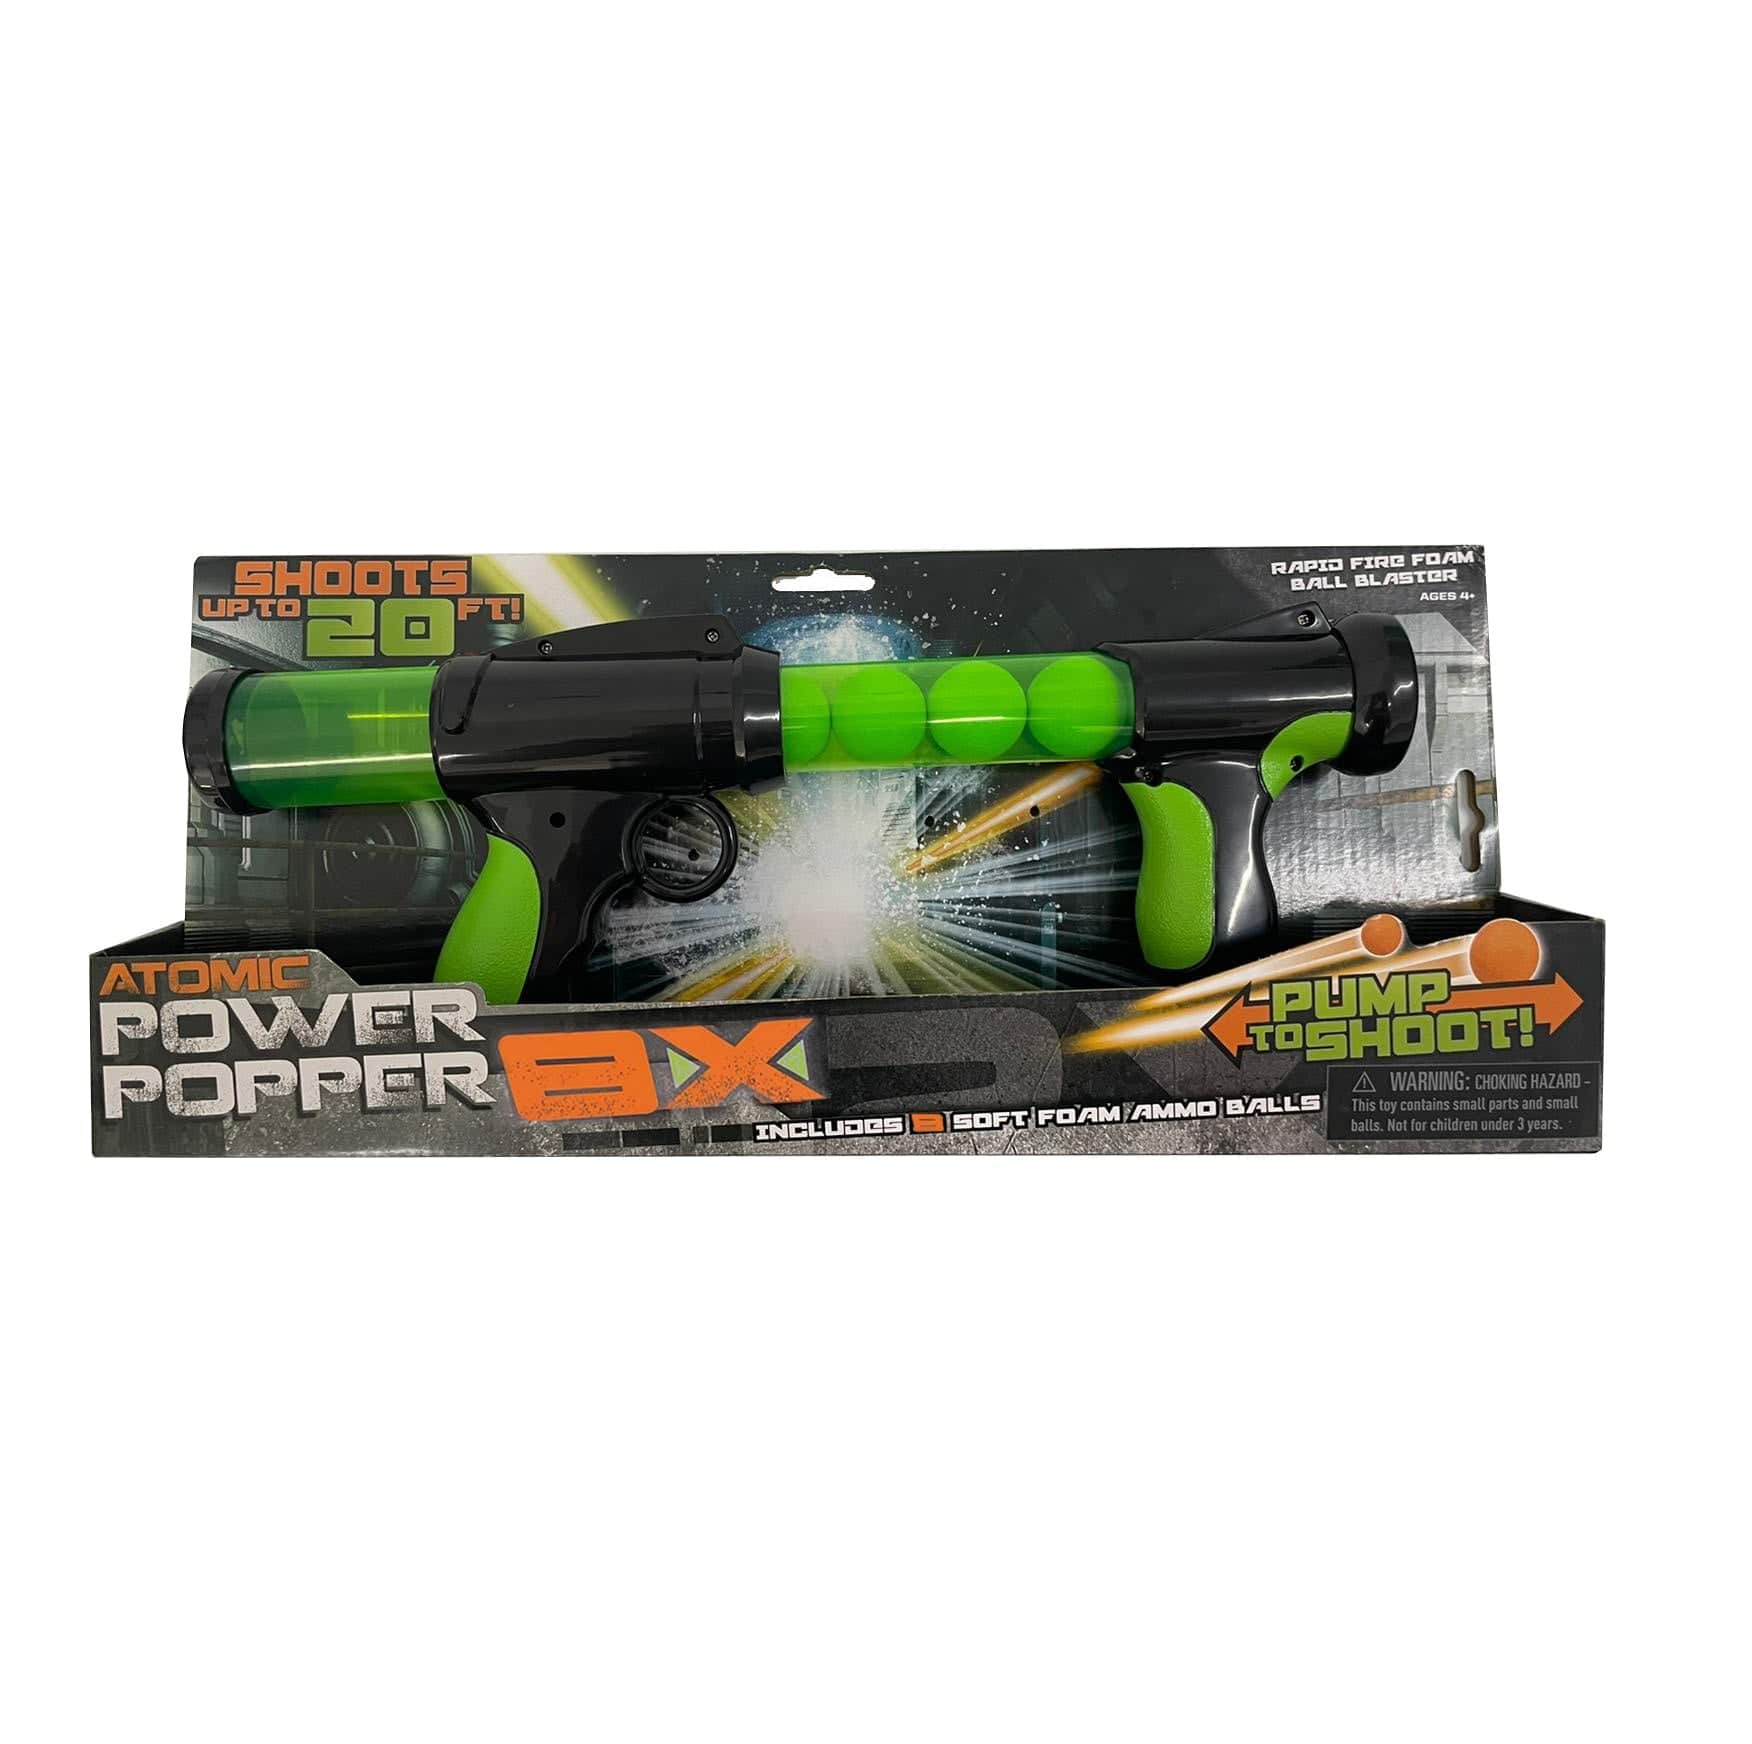 HOG WILD Toys Hog Wild Atomic Power Popper 8x - Green